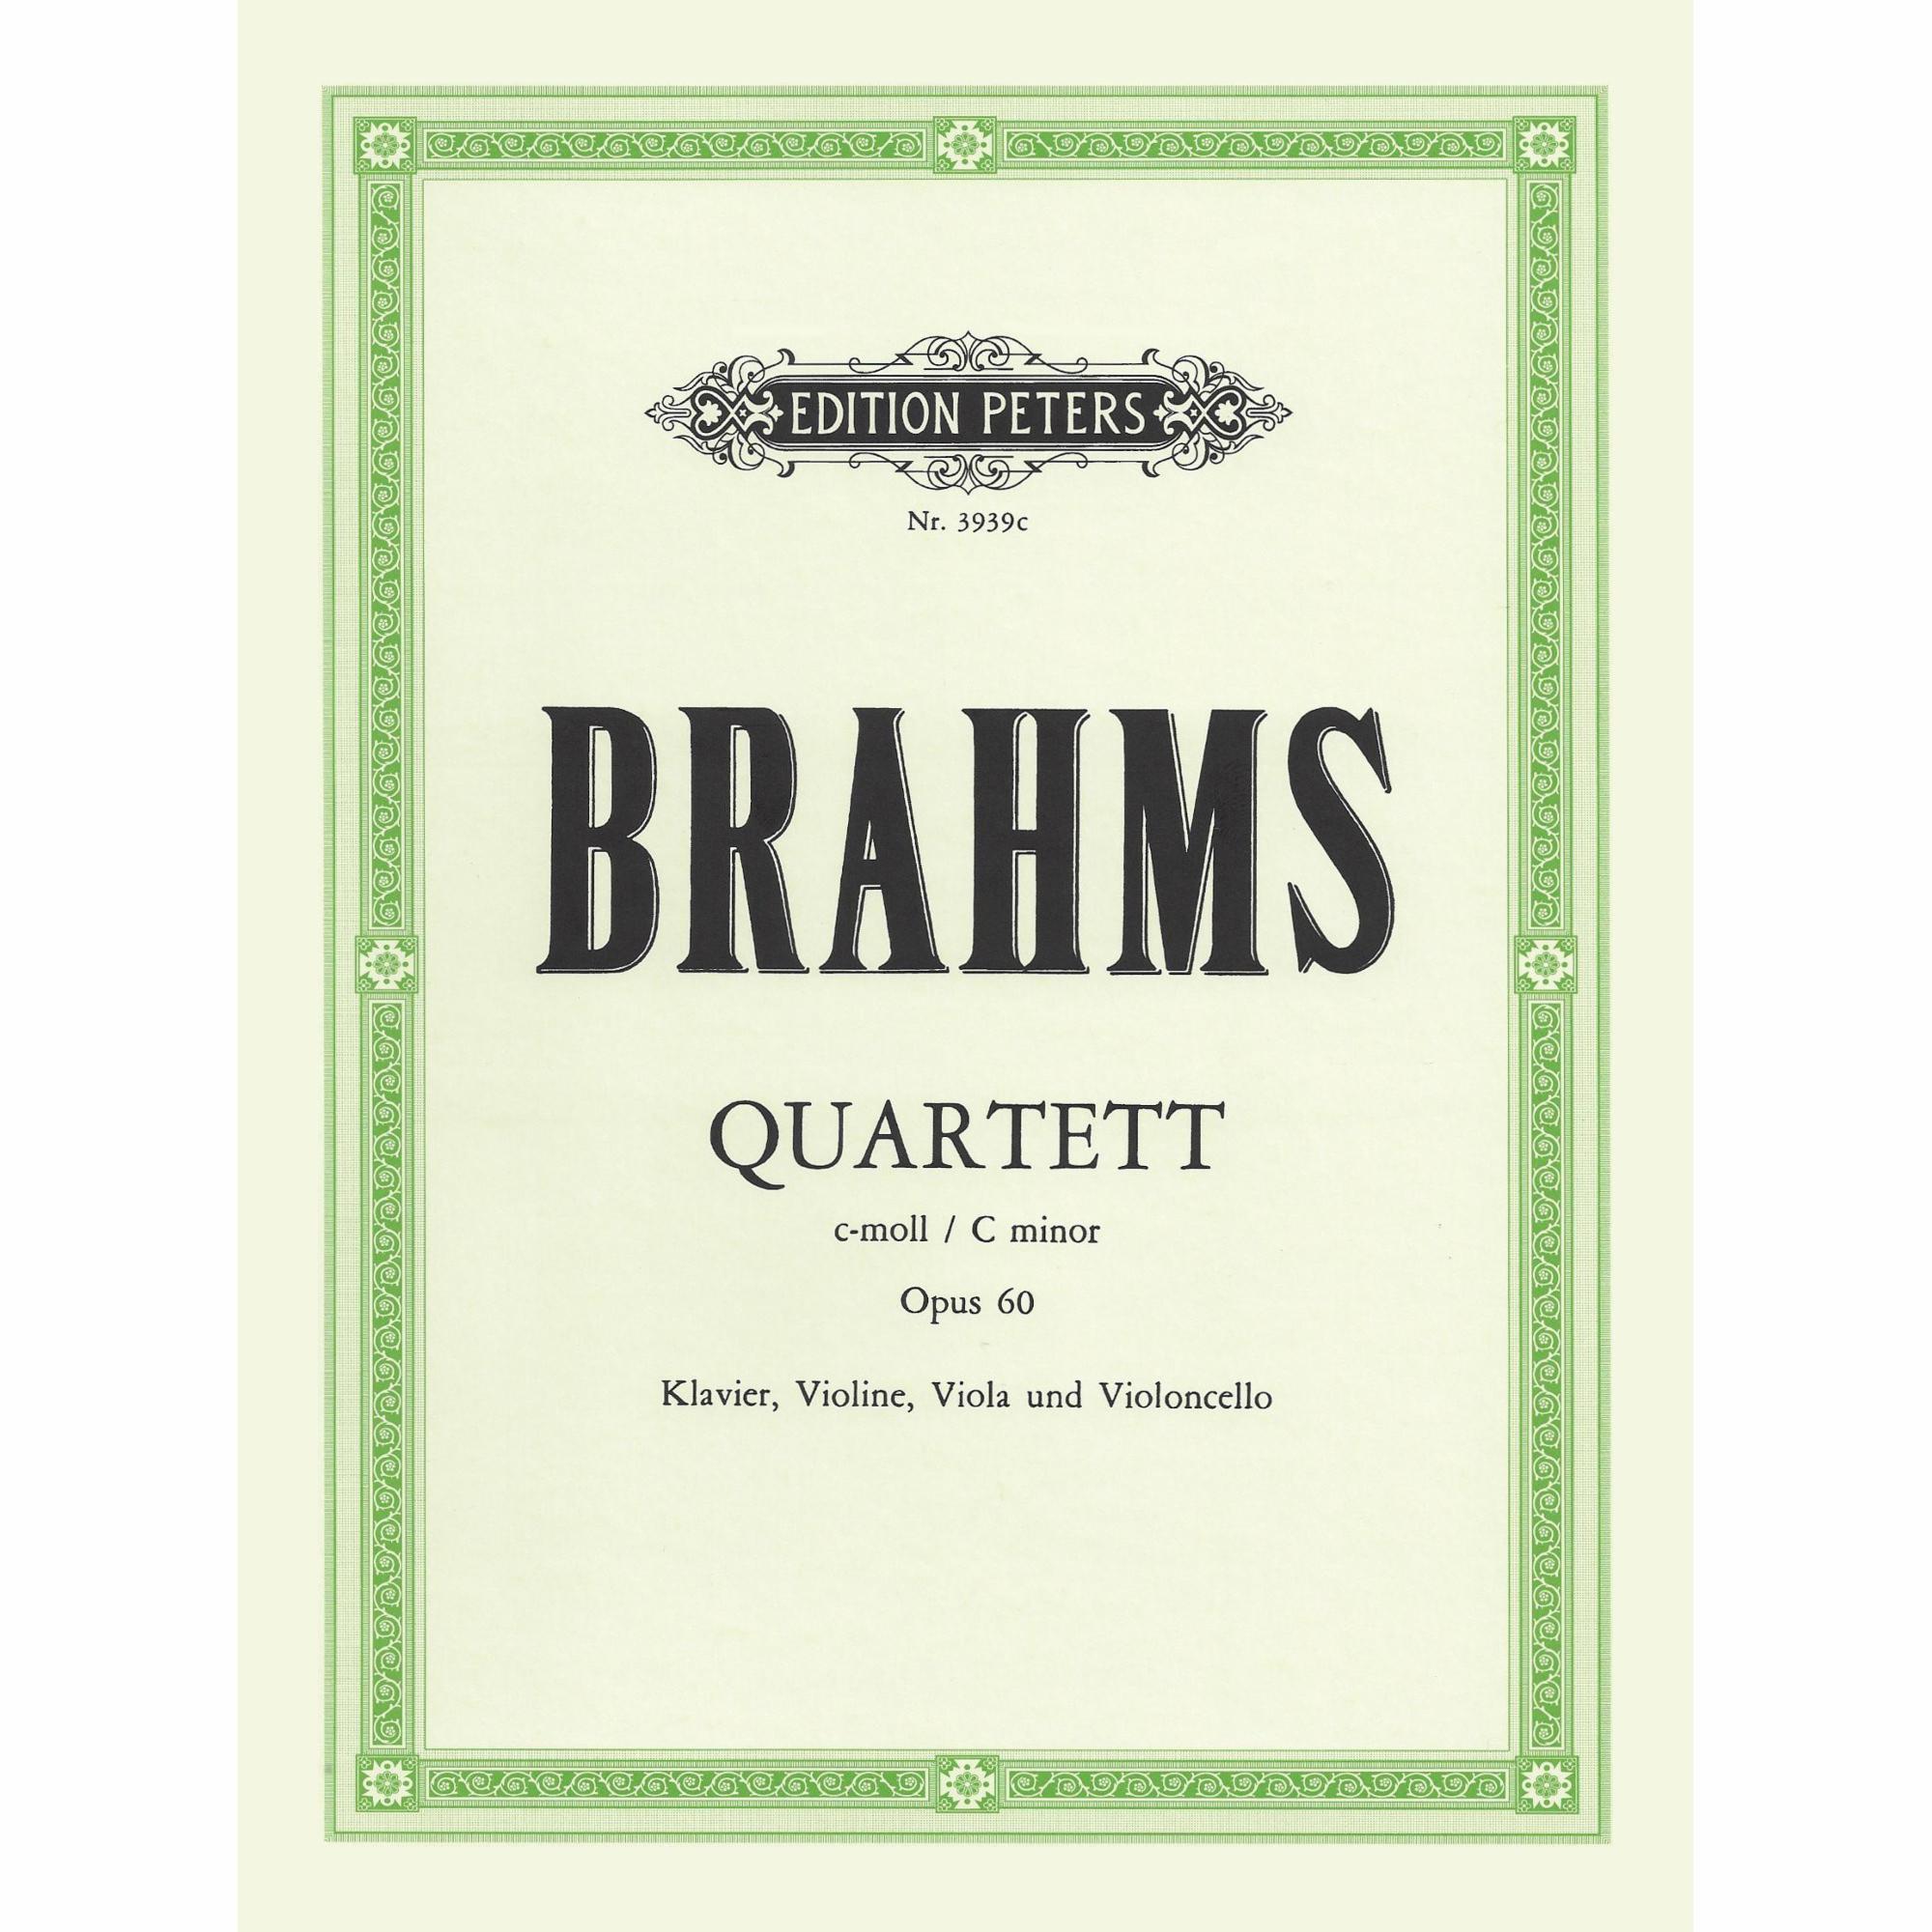 Brahms -- Piano Quartet in C Minor, Op. 60